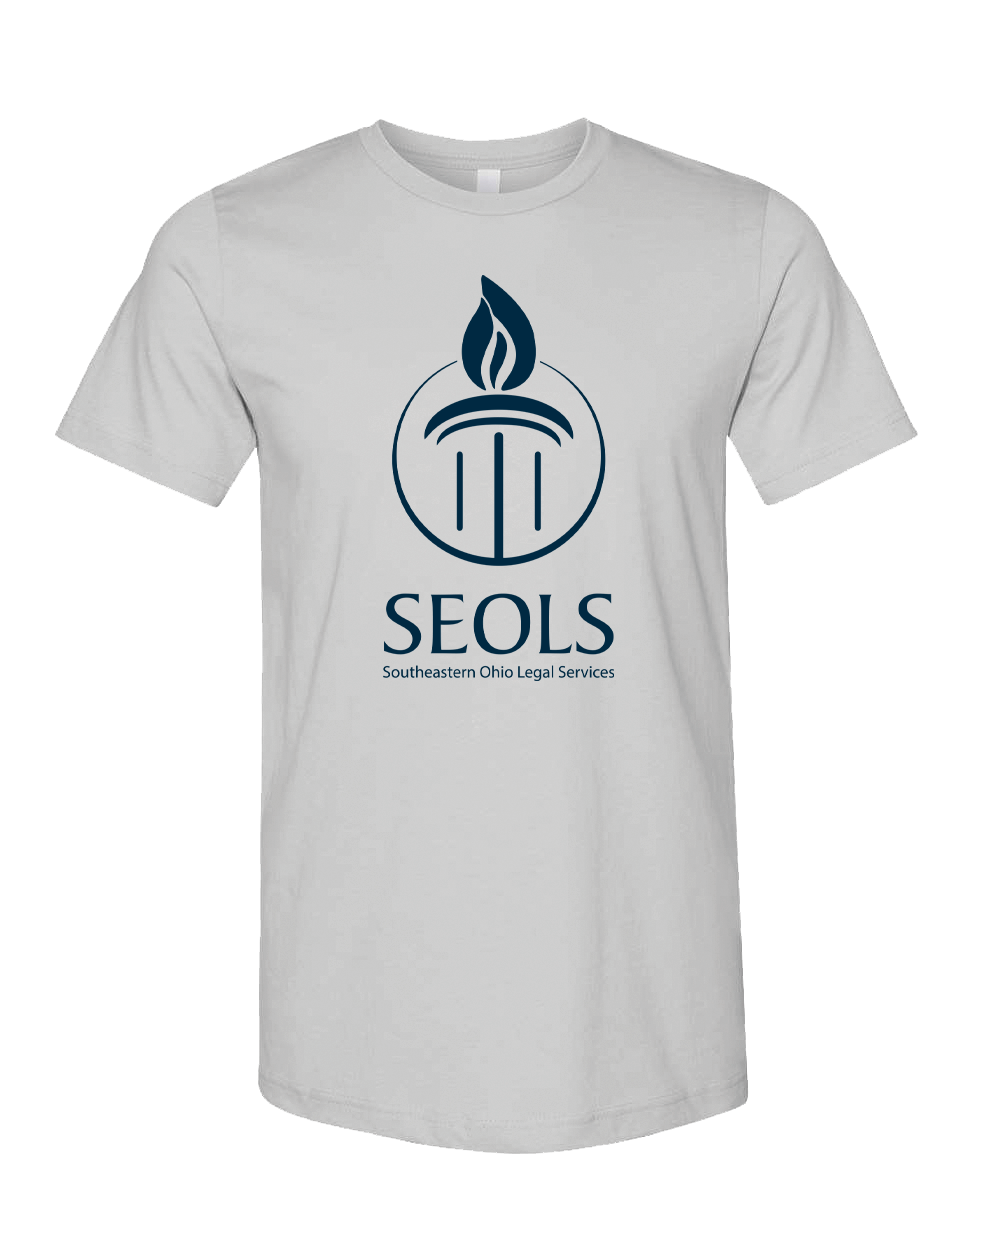 SEOLS - Southeastern Ohio Legal Services Premium T-Shirt